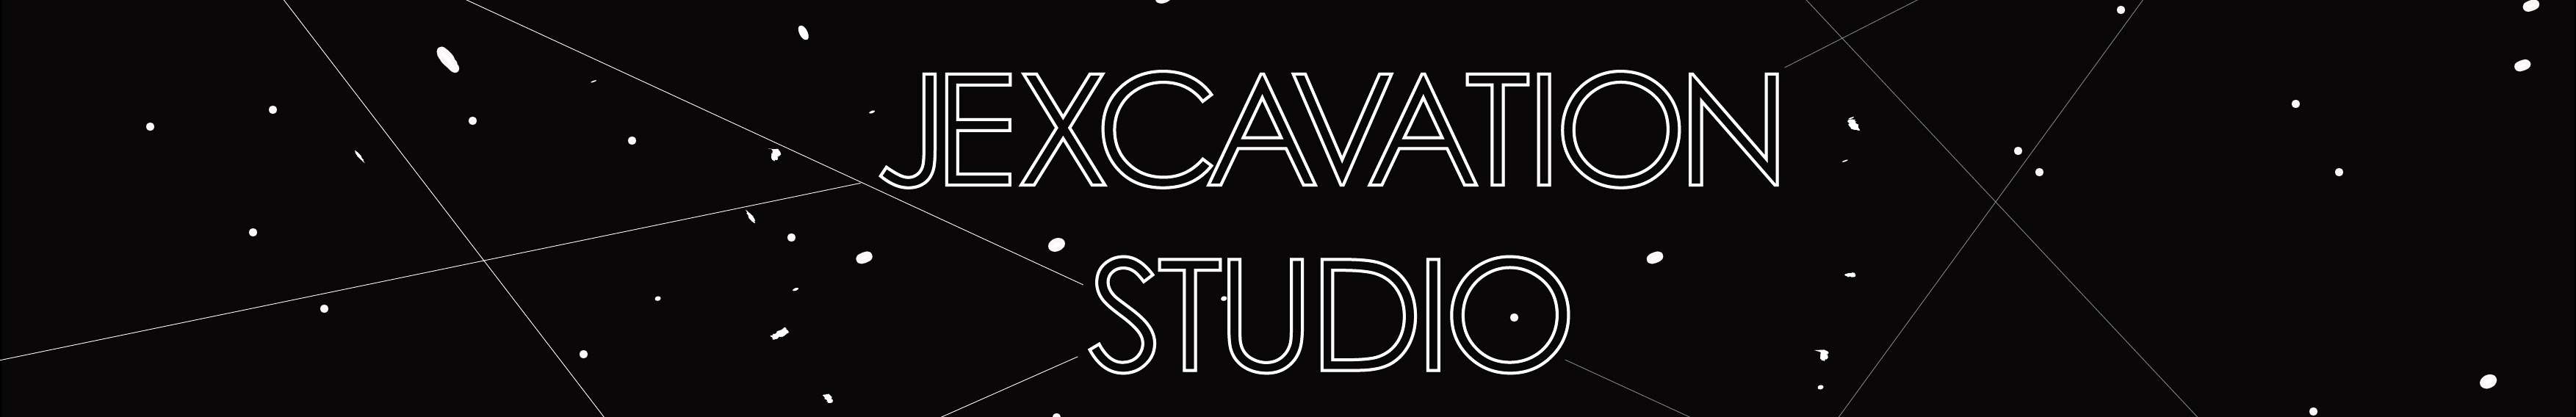 Studio Jexcavation's profile banner